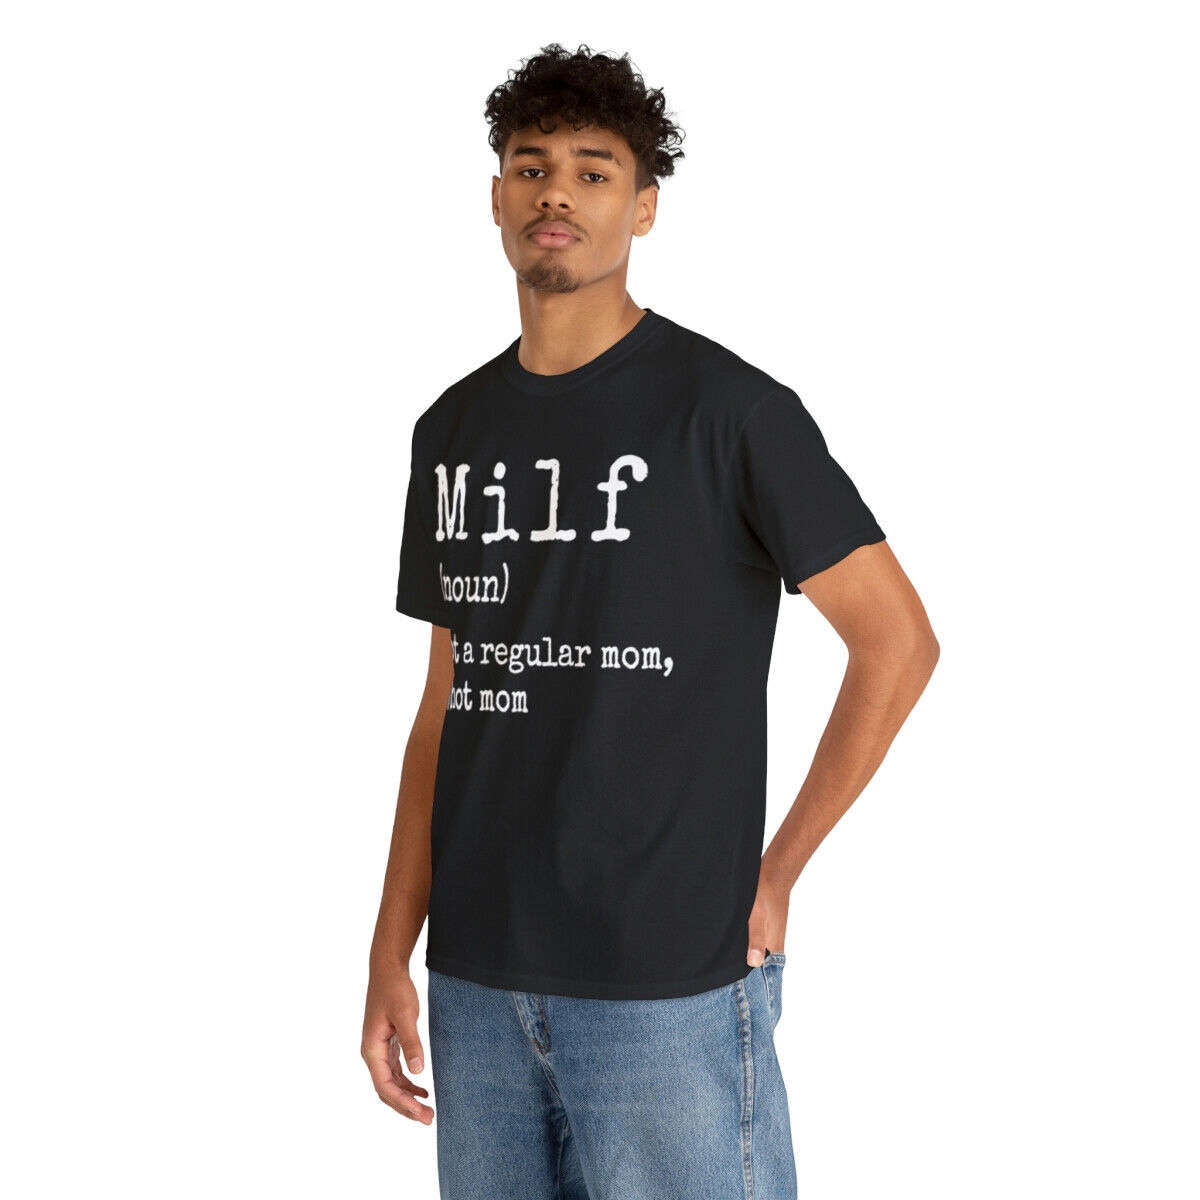 danny dunham recommends Tight Shirt Milf